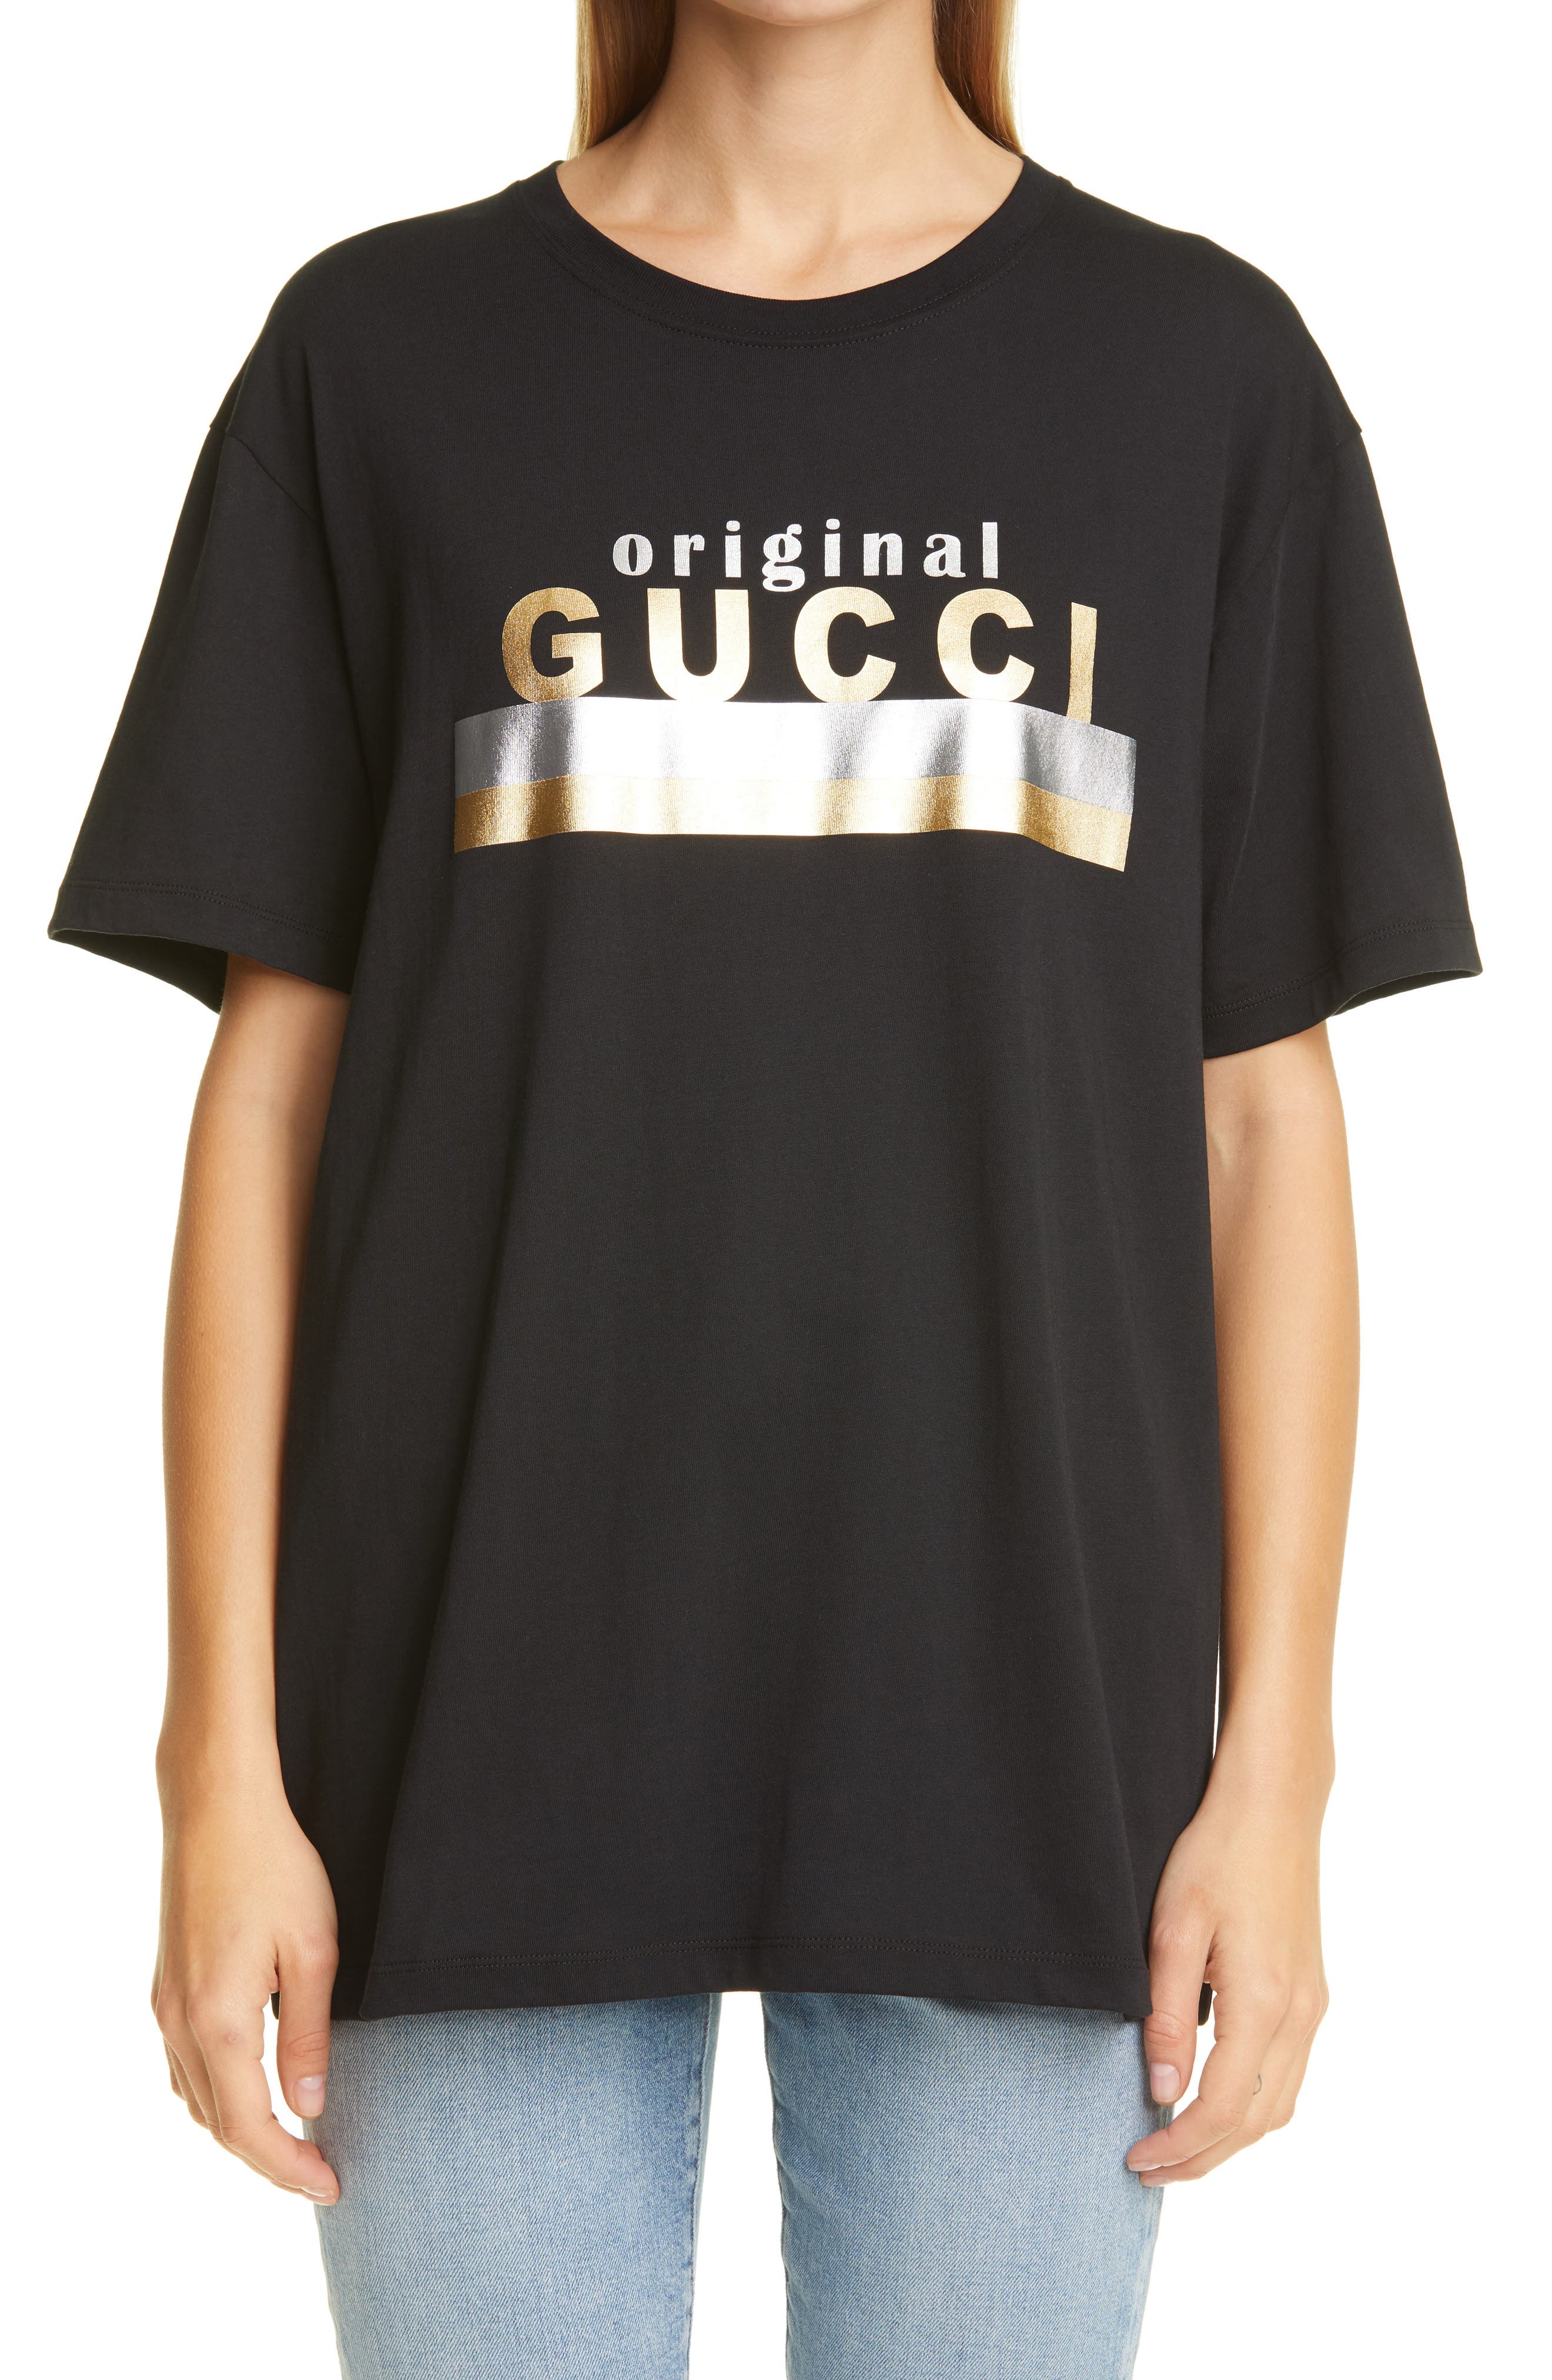 gucci t shirt original price in india